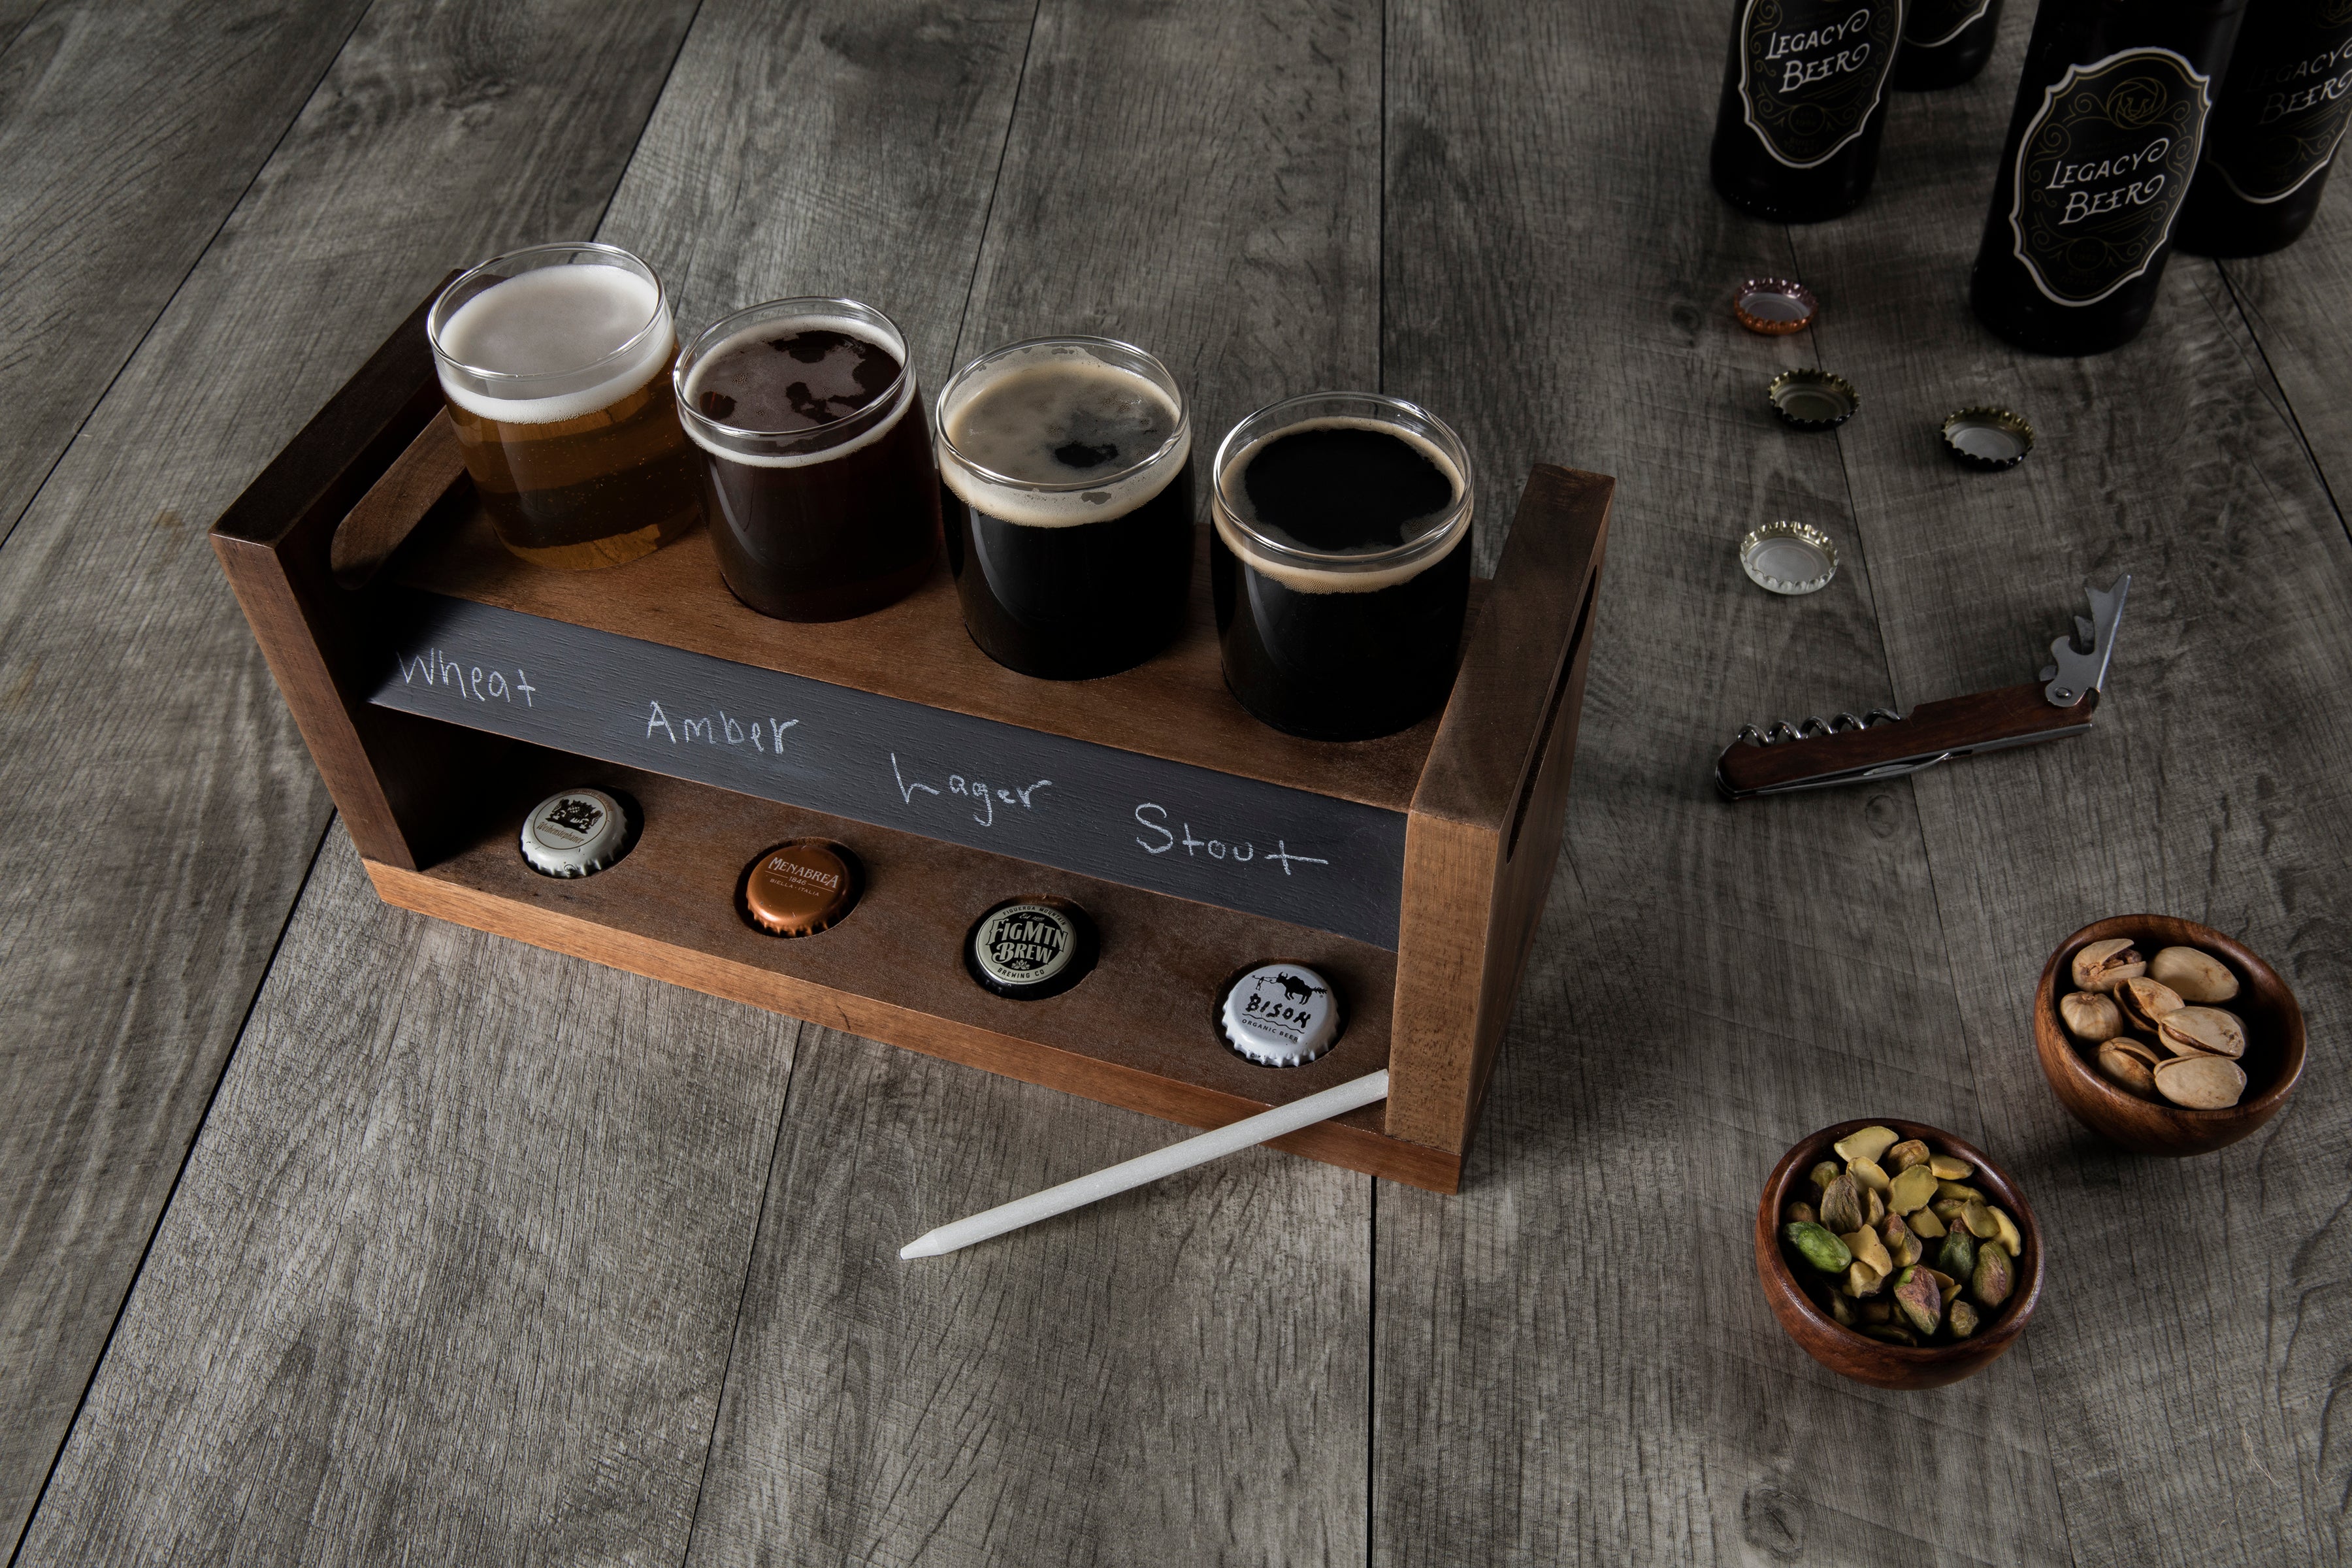 San Diego Padres - Craft Beer Flight Beverage Sampler